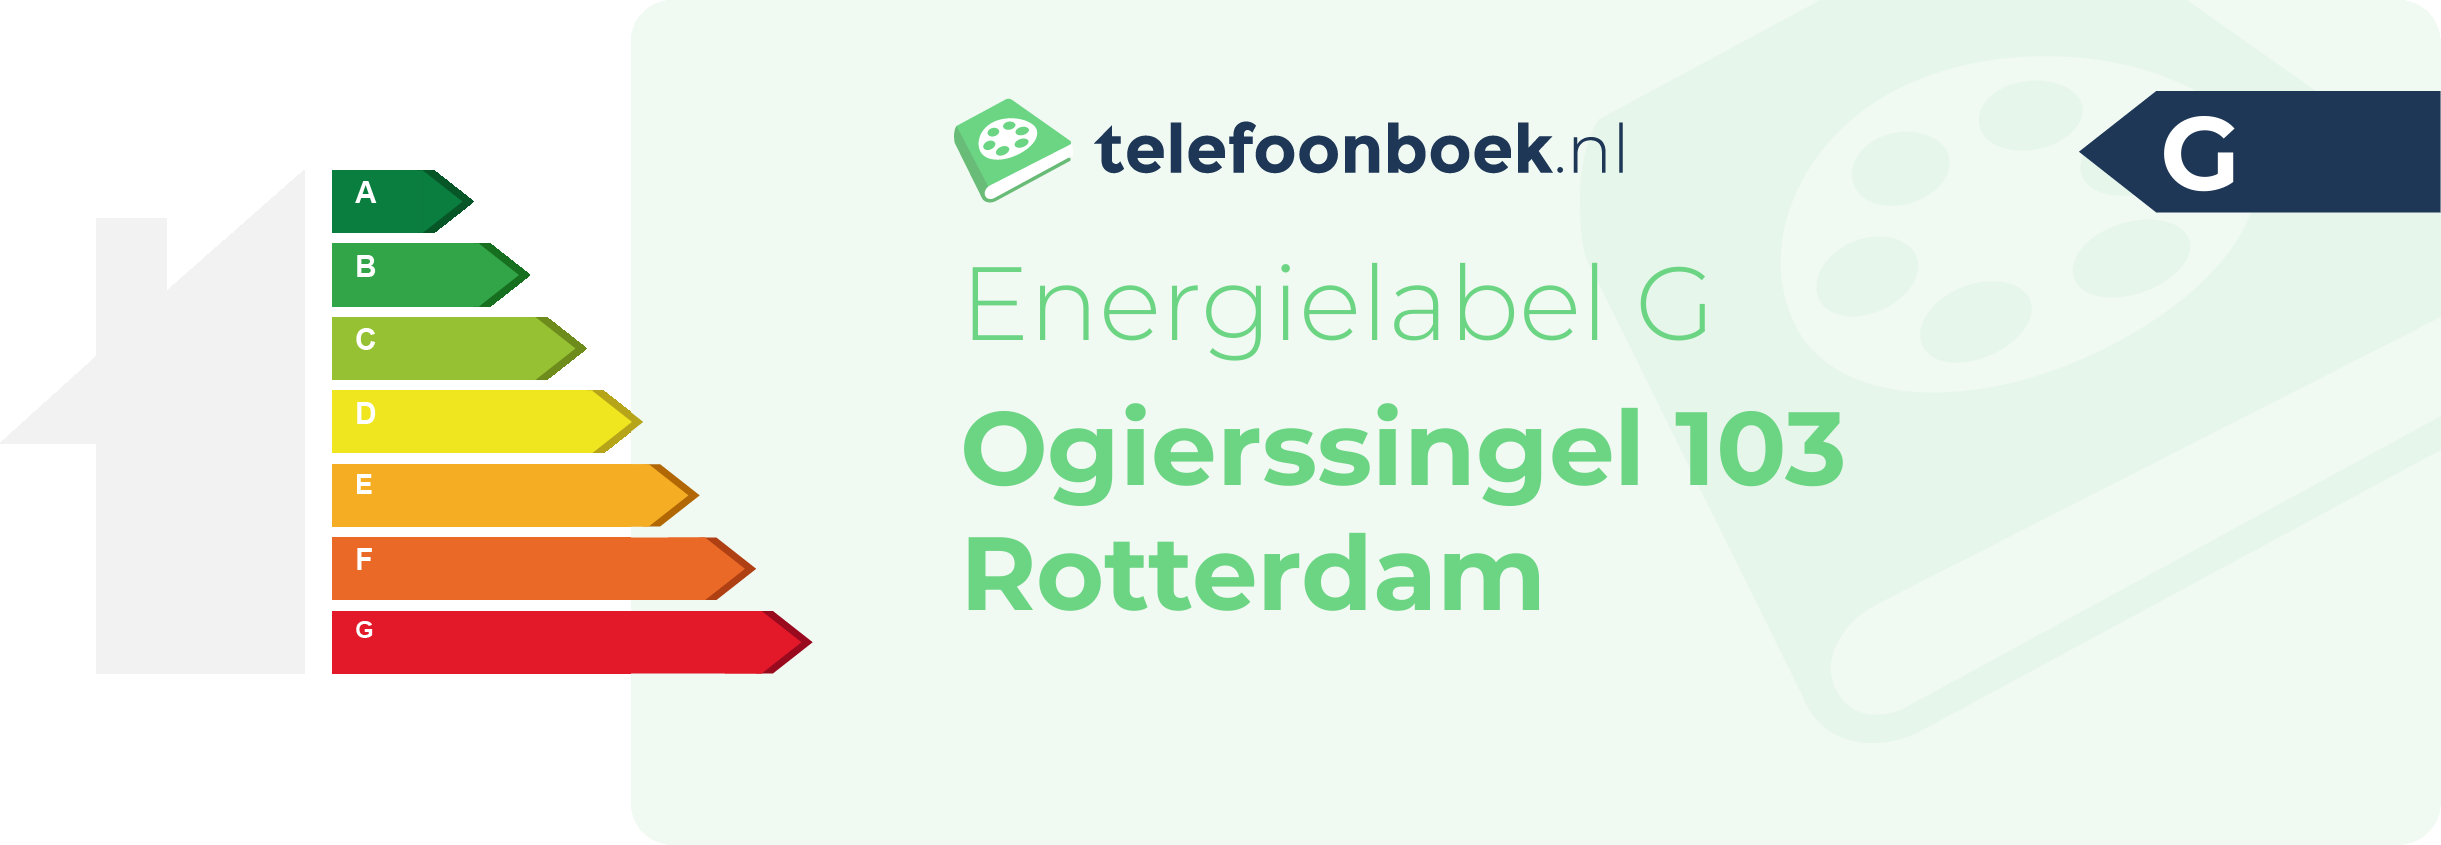 Energielabel Ogierssingel 103 Rotterdam